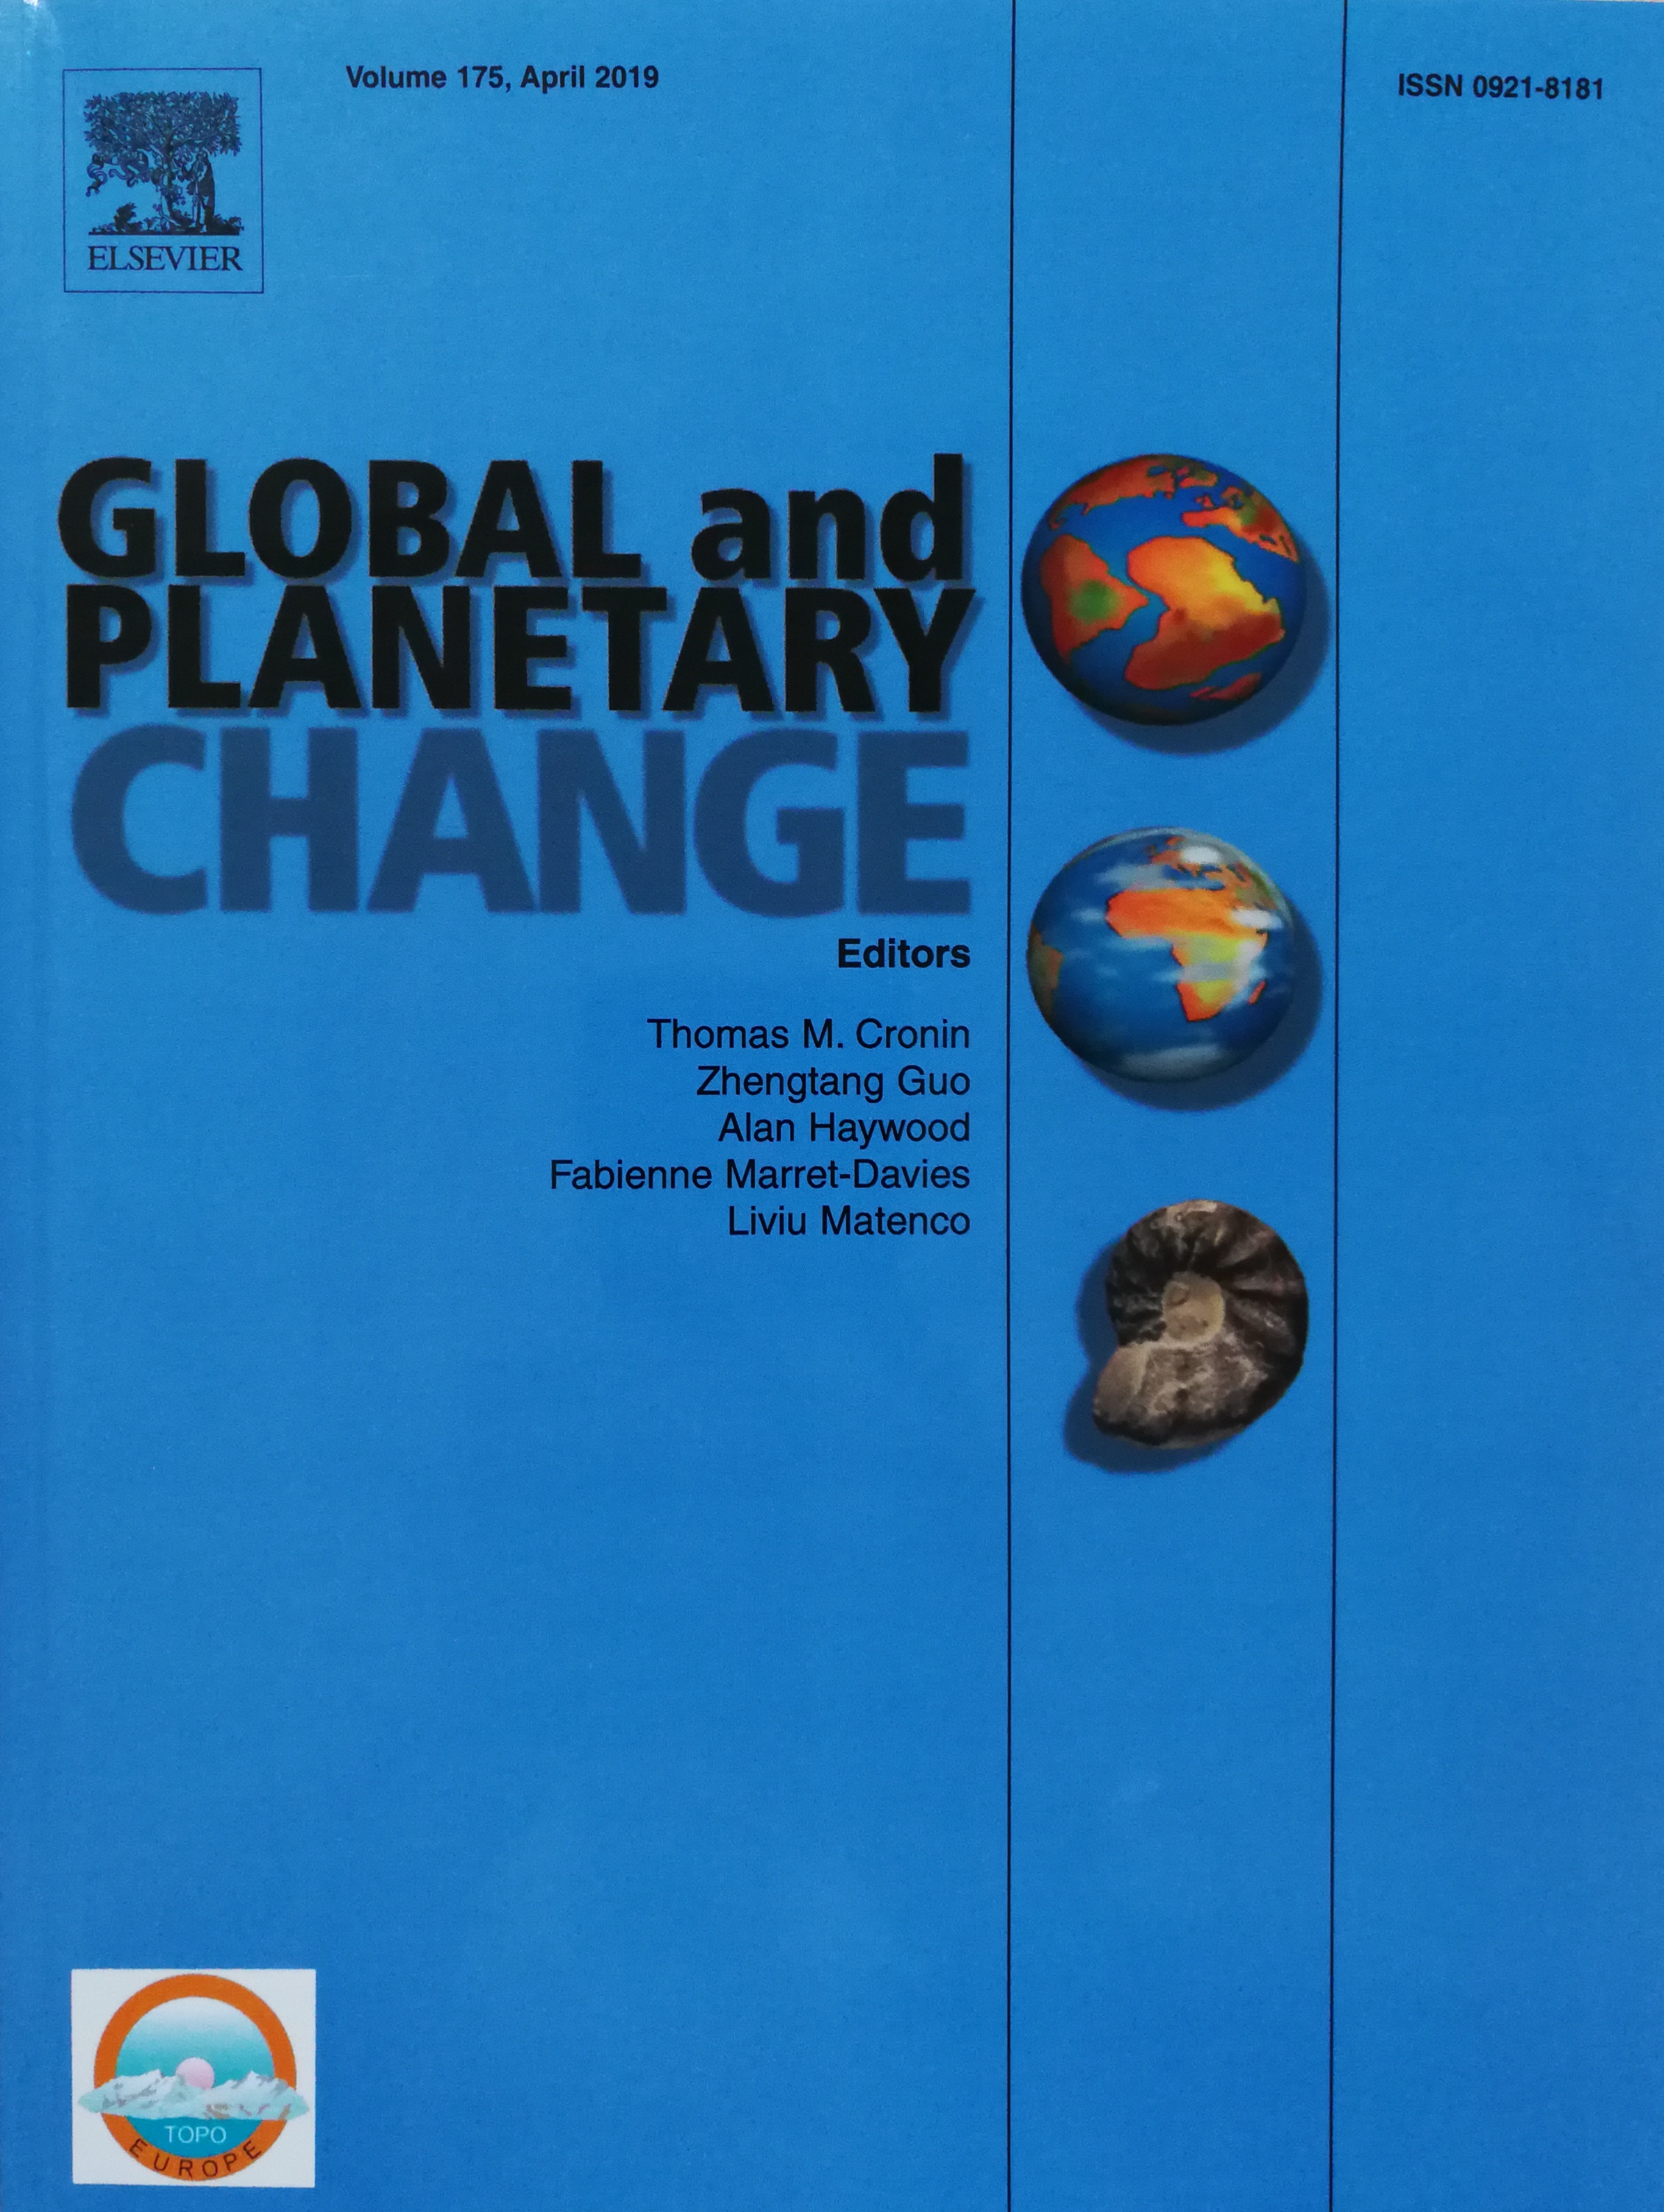 GLOBAL and PLANETARY CHANGE